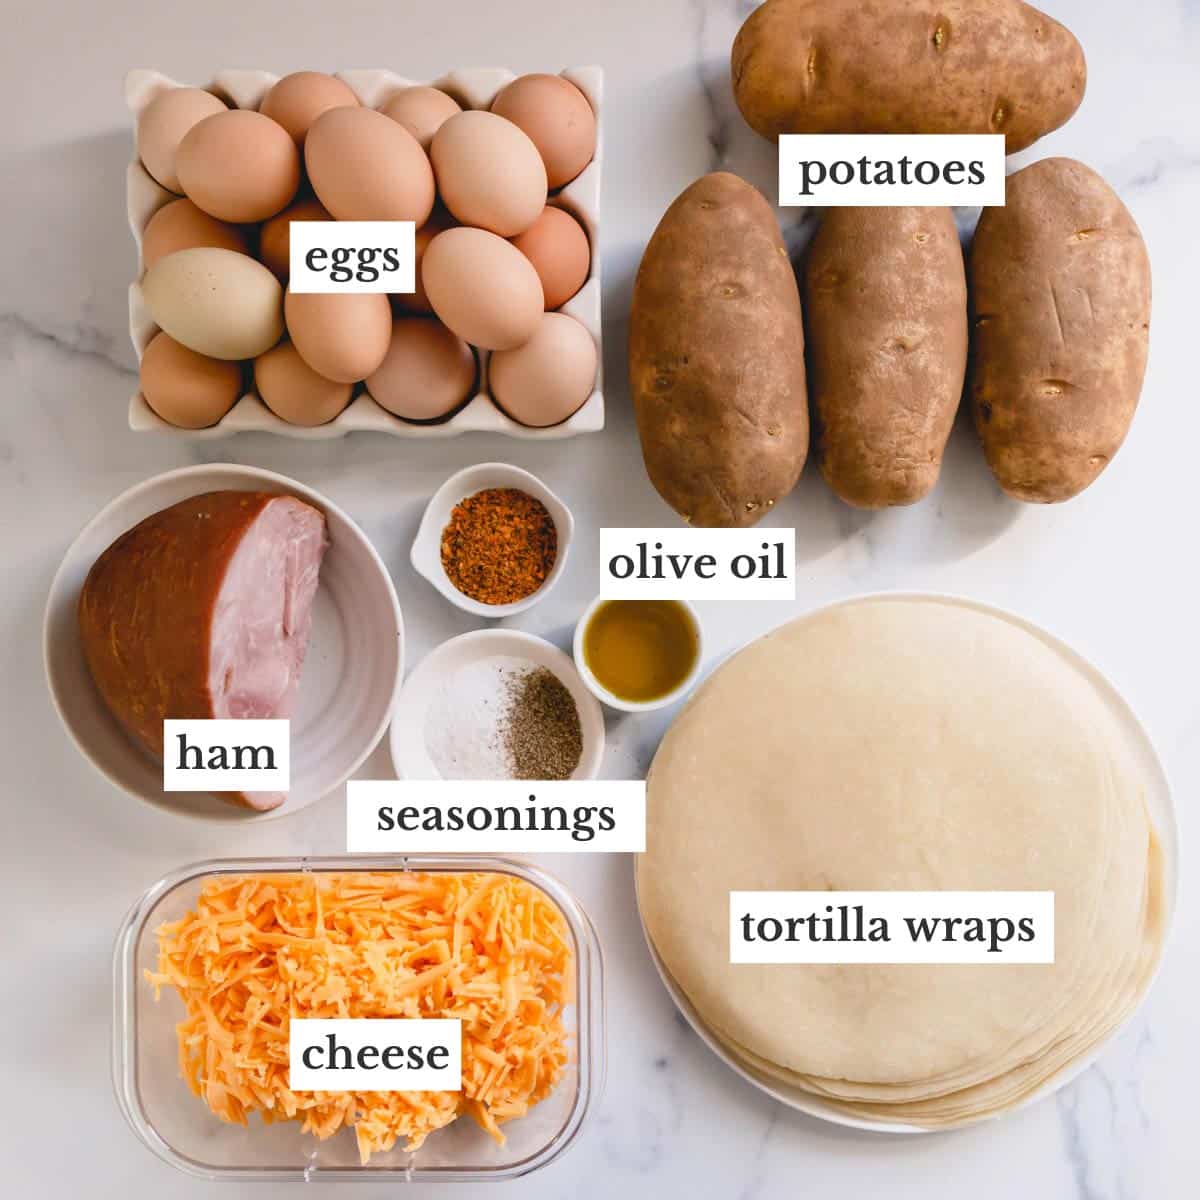 tortillas, cheese, ham, potatoes, eggs